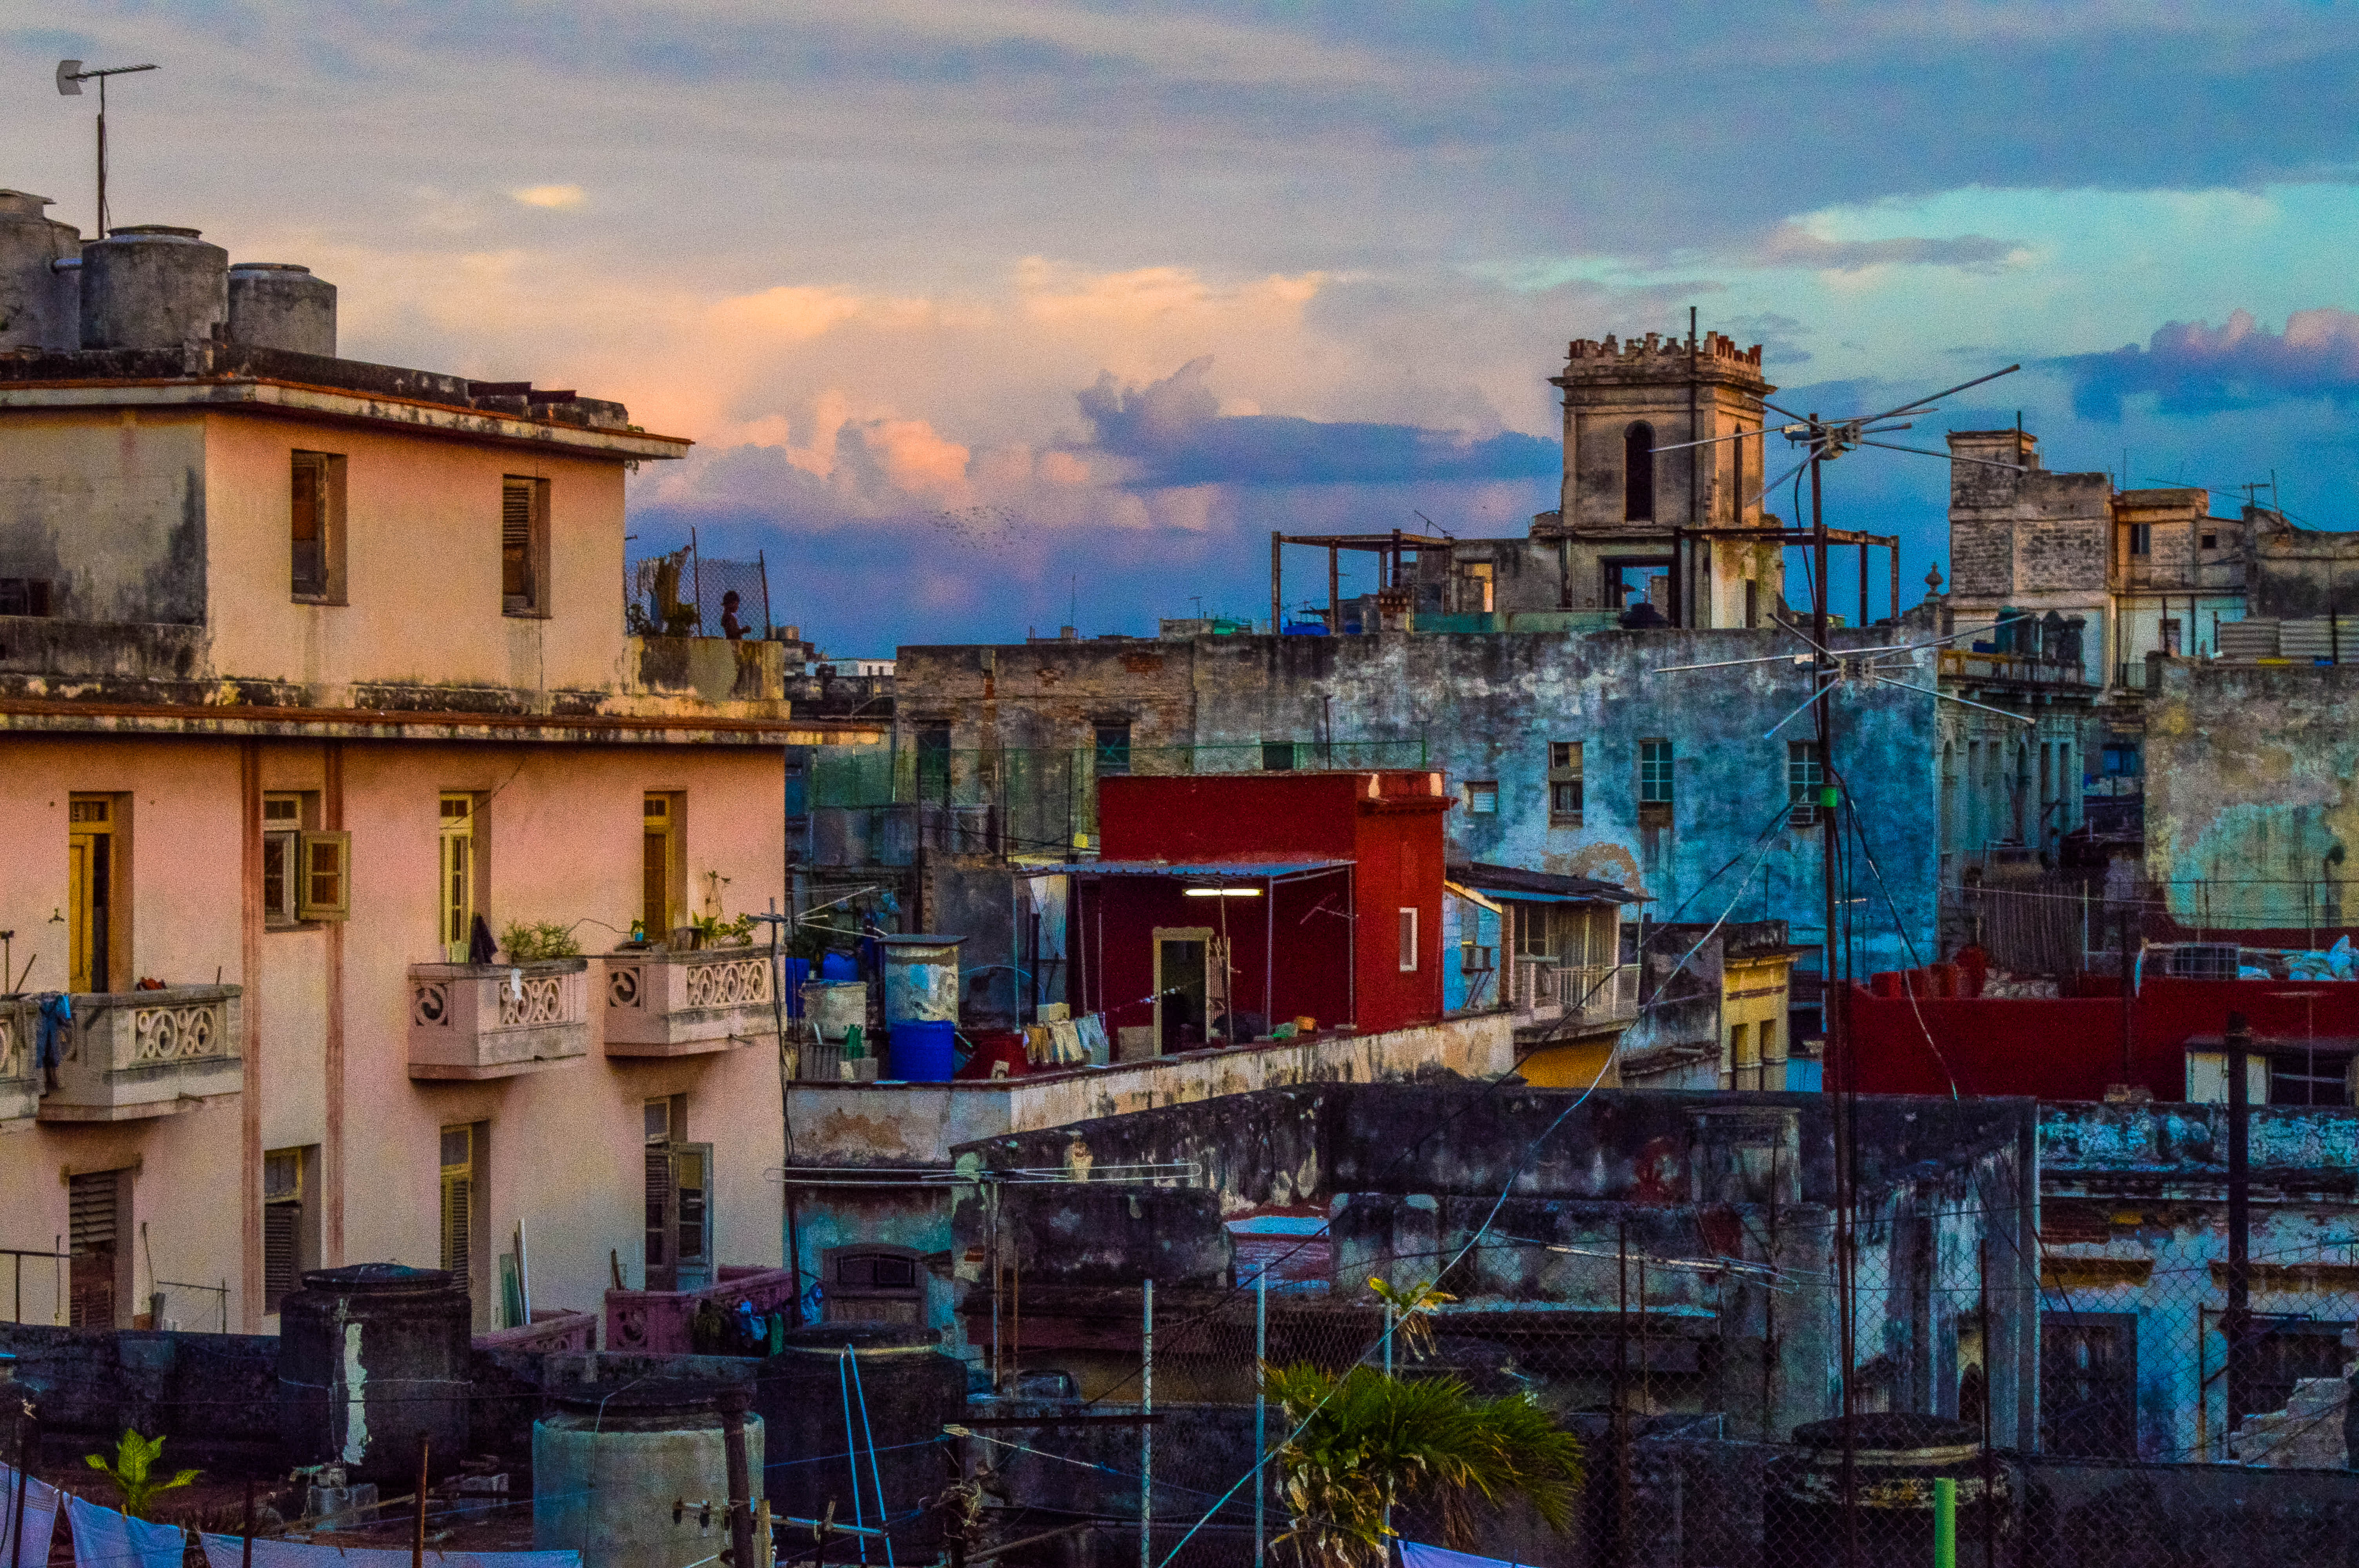 Habana Rooftops at Sunset